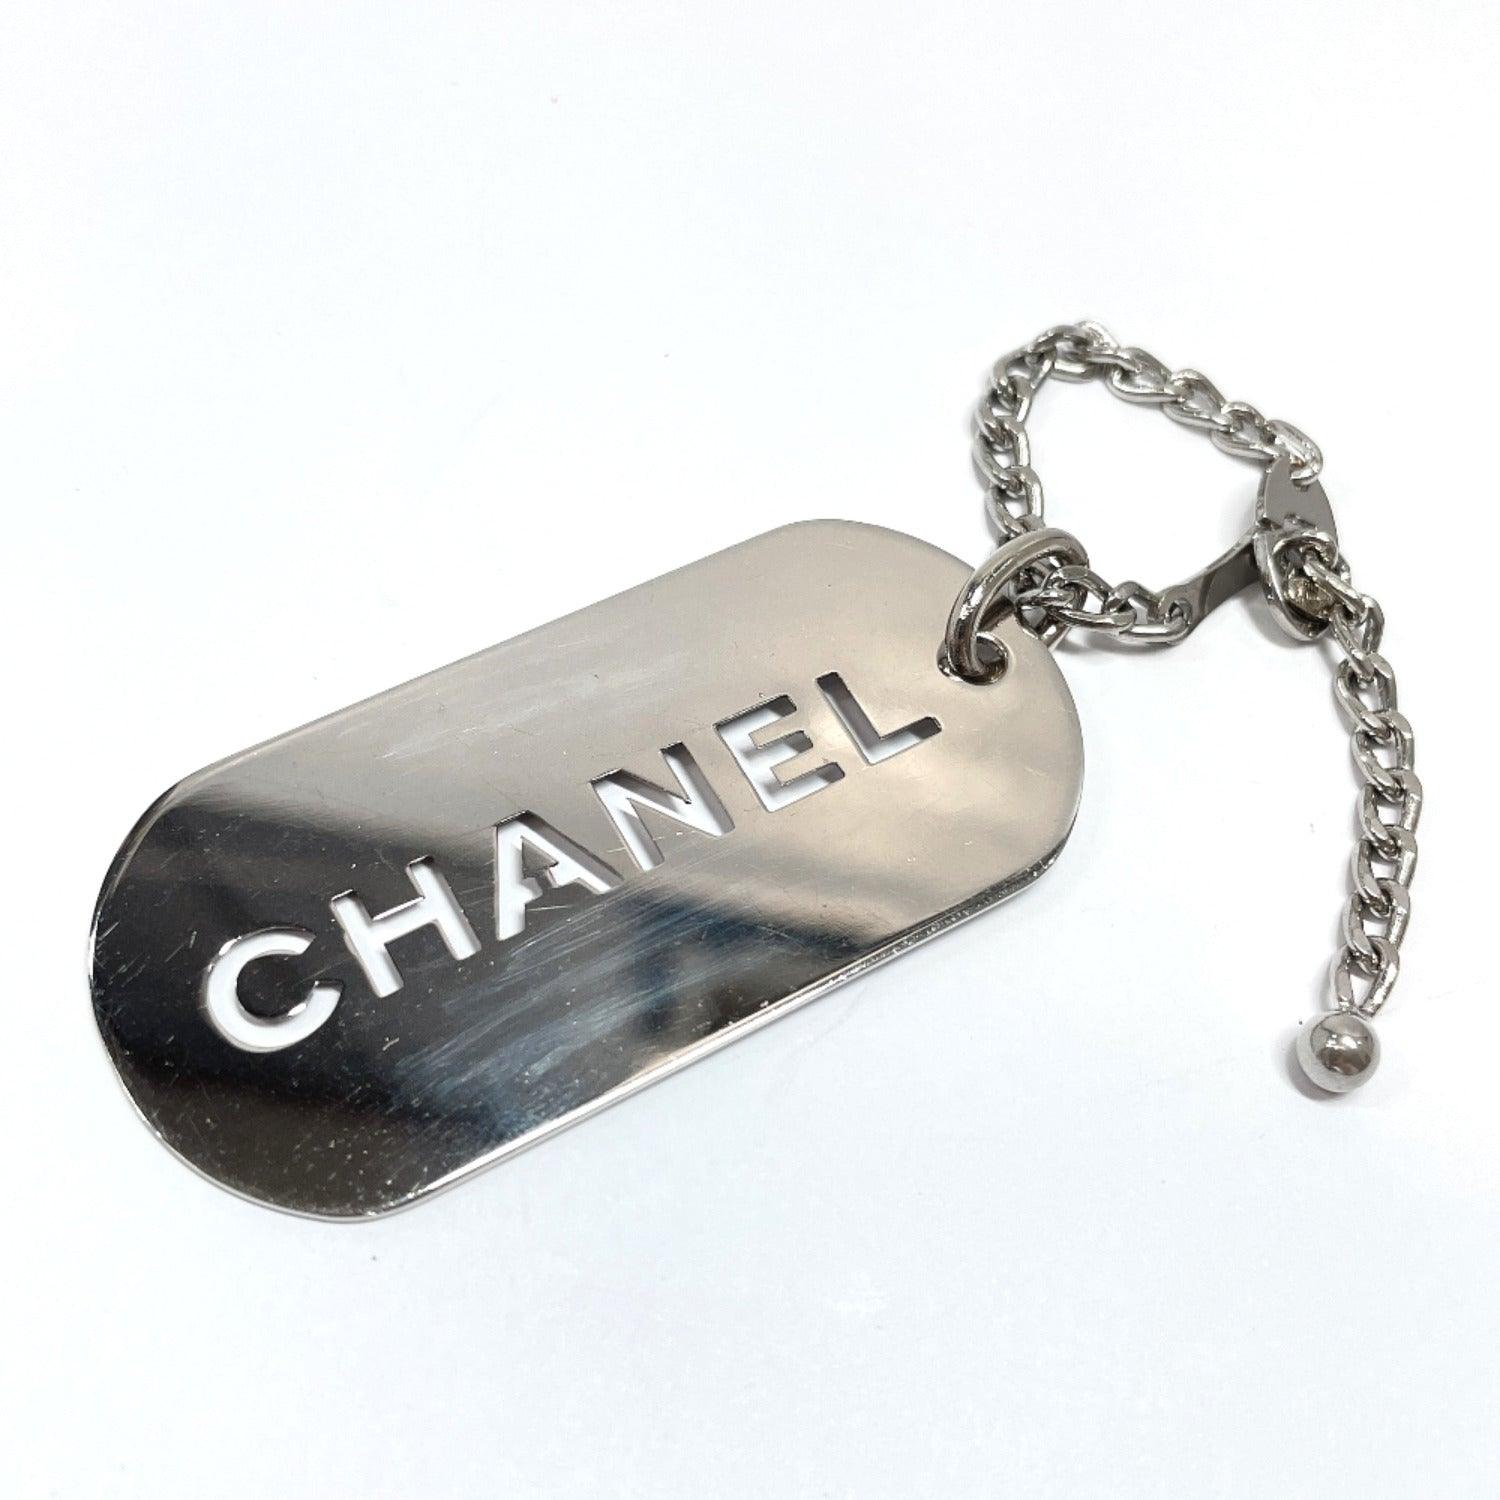 Chanel crystal cc large - Gem